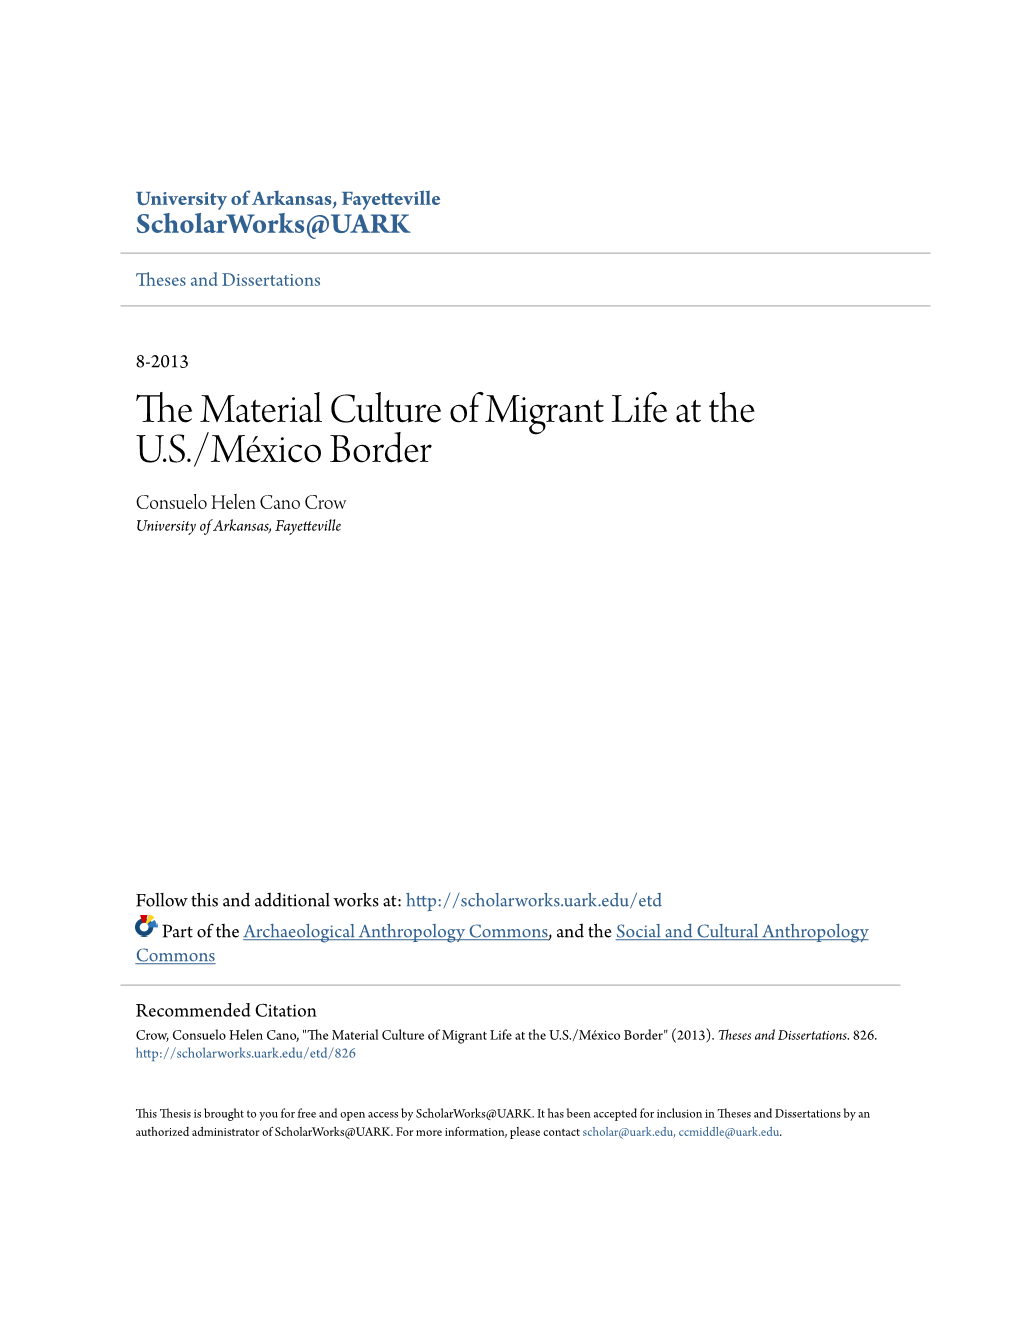 The Material Culture of Migrant Life at the U.S./México Border